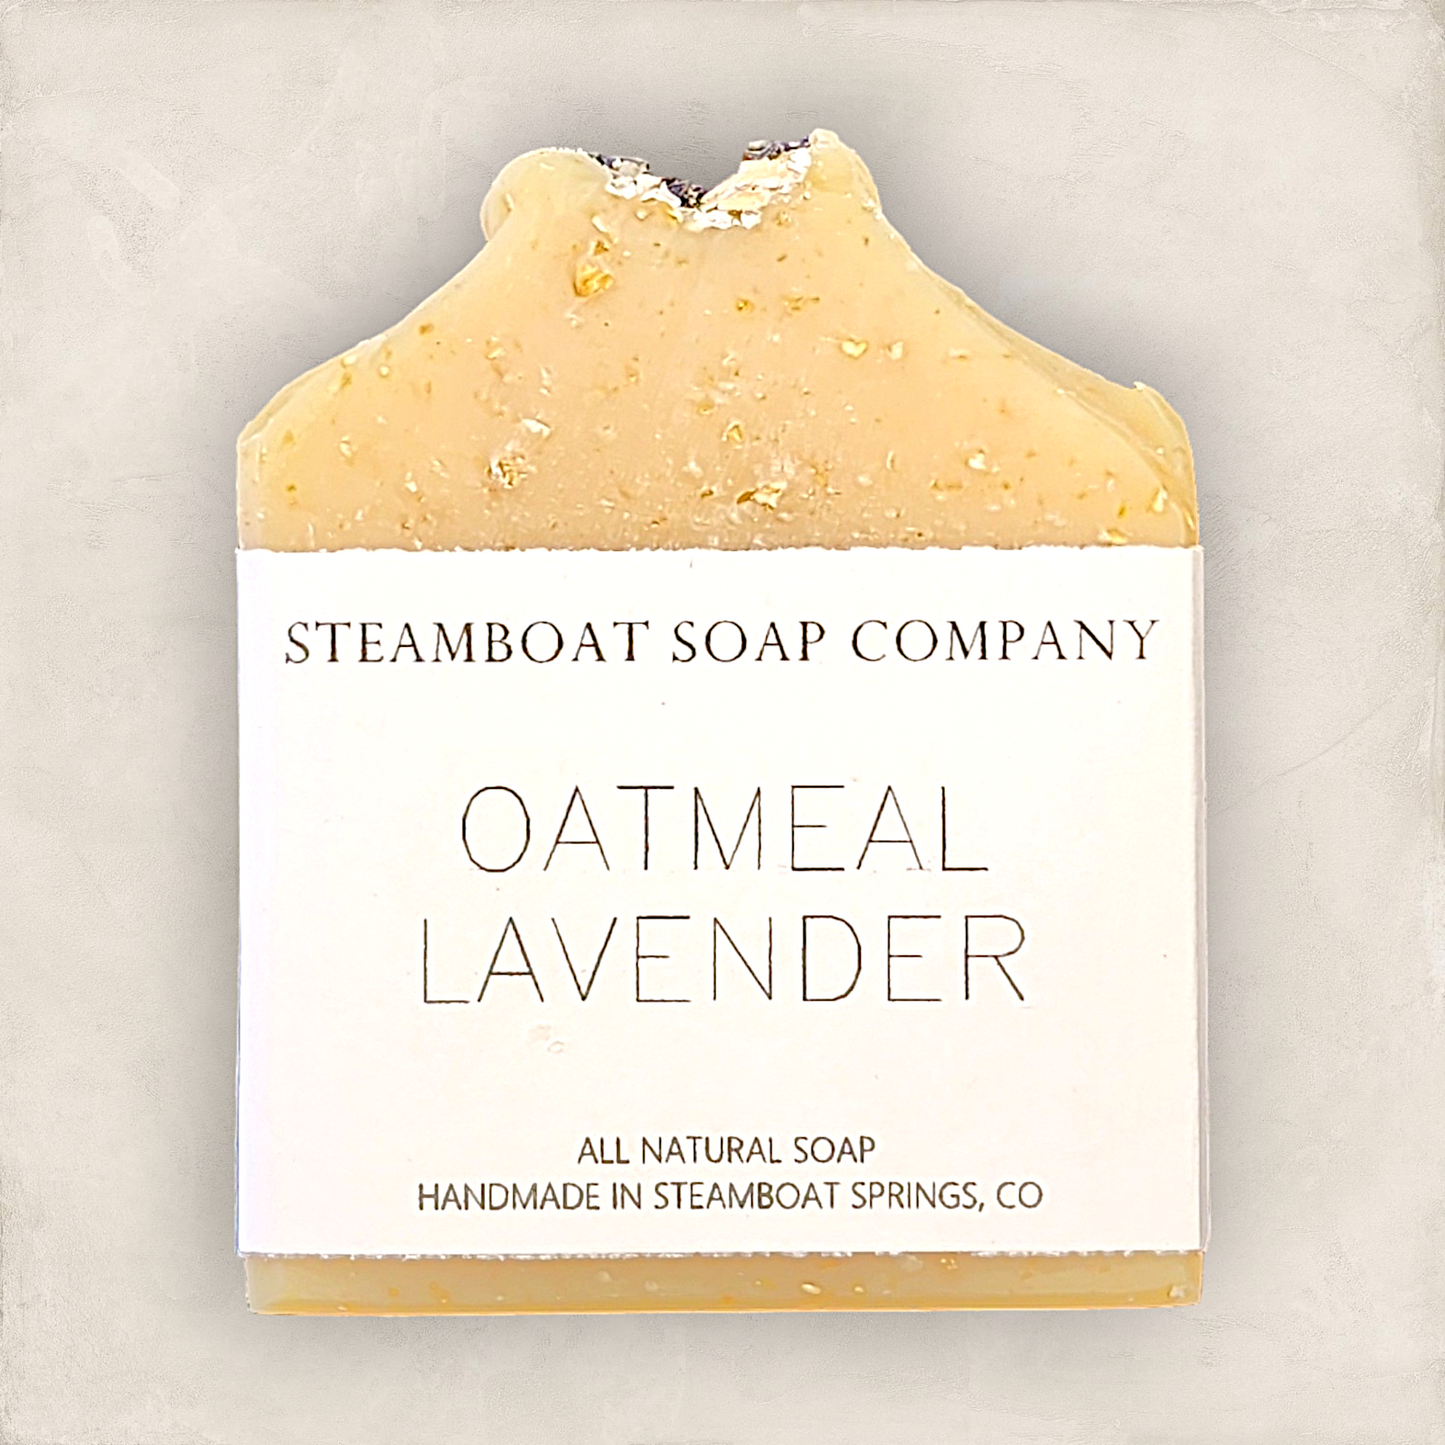 Steamboat Soap Company